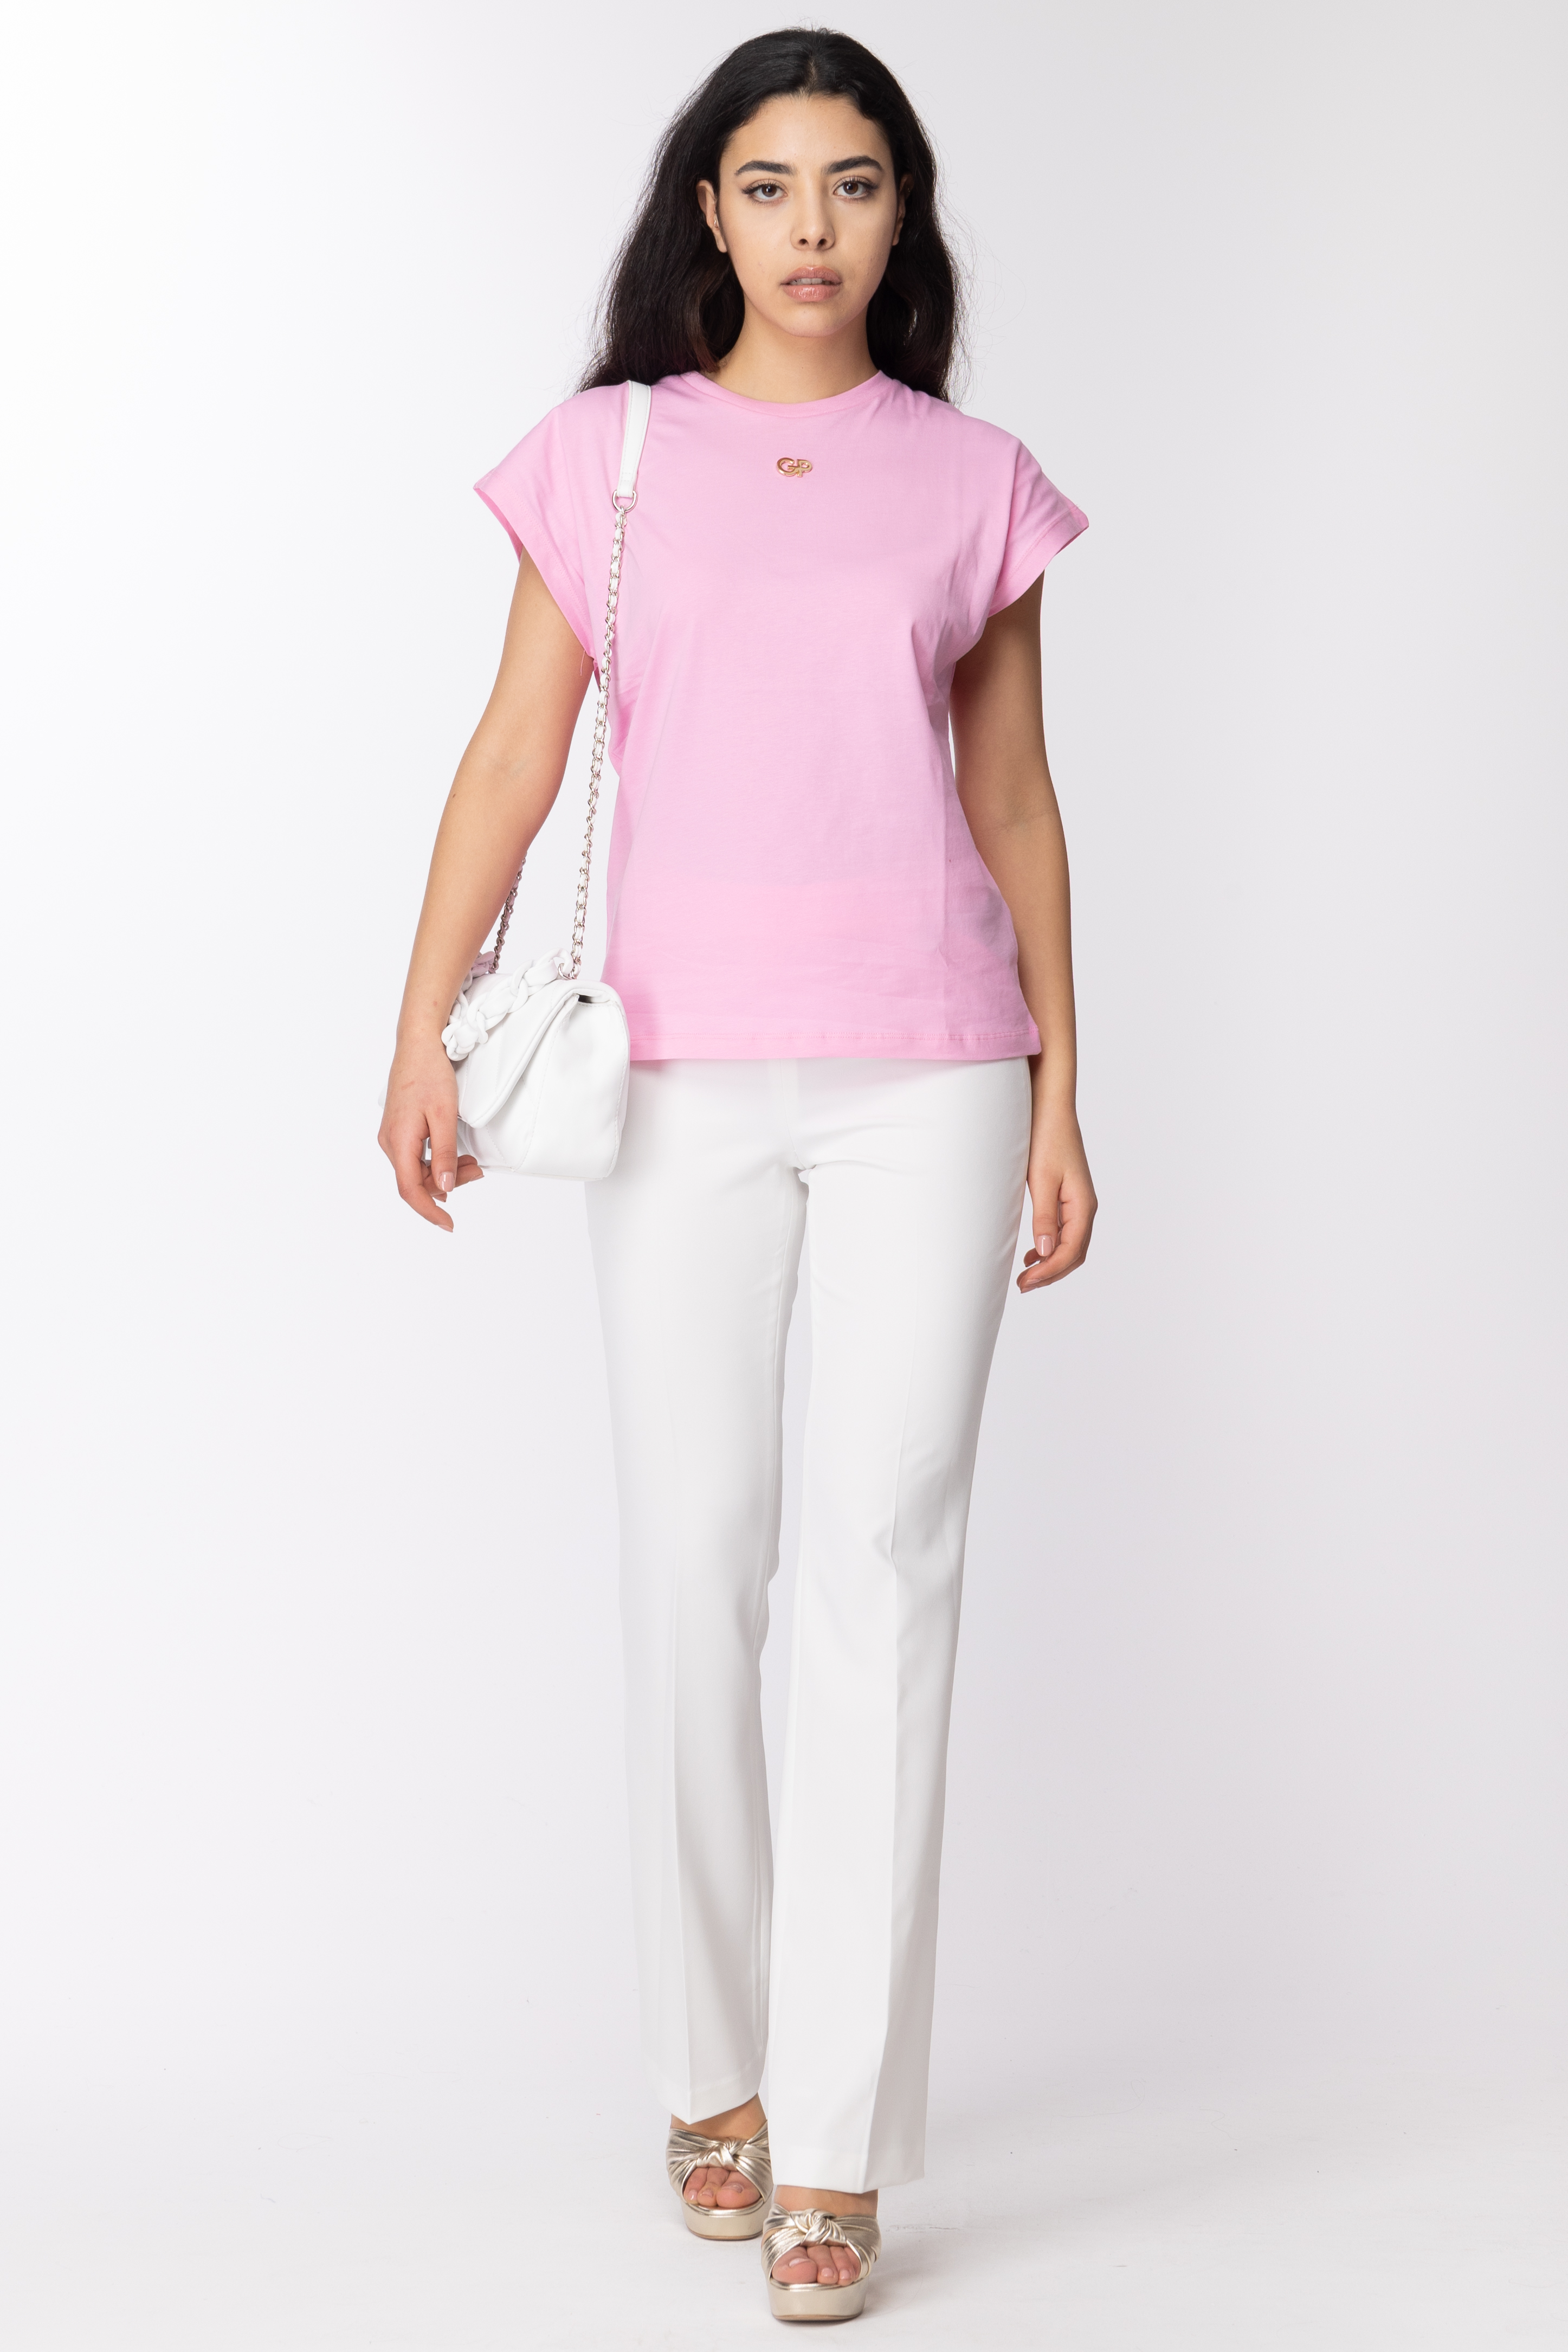 Anteprima: Gaelle Paris T-shirt con placchetta logata ROSA BONBON